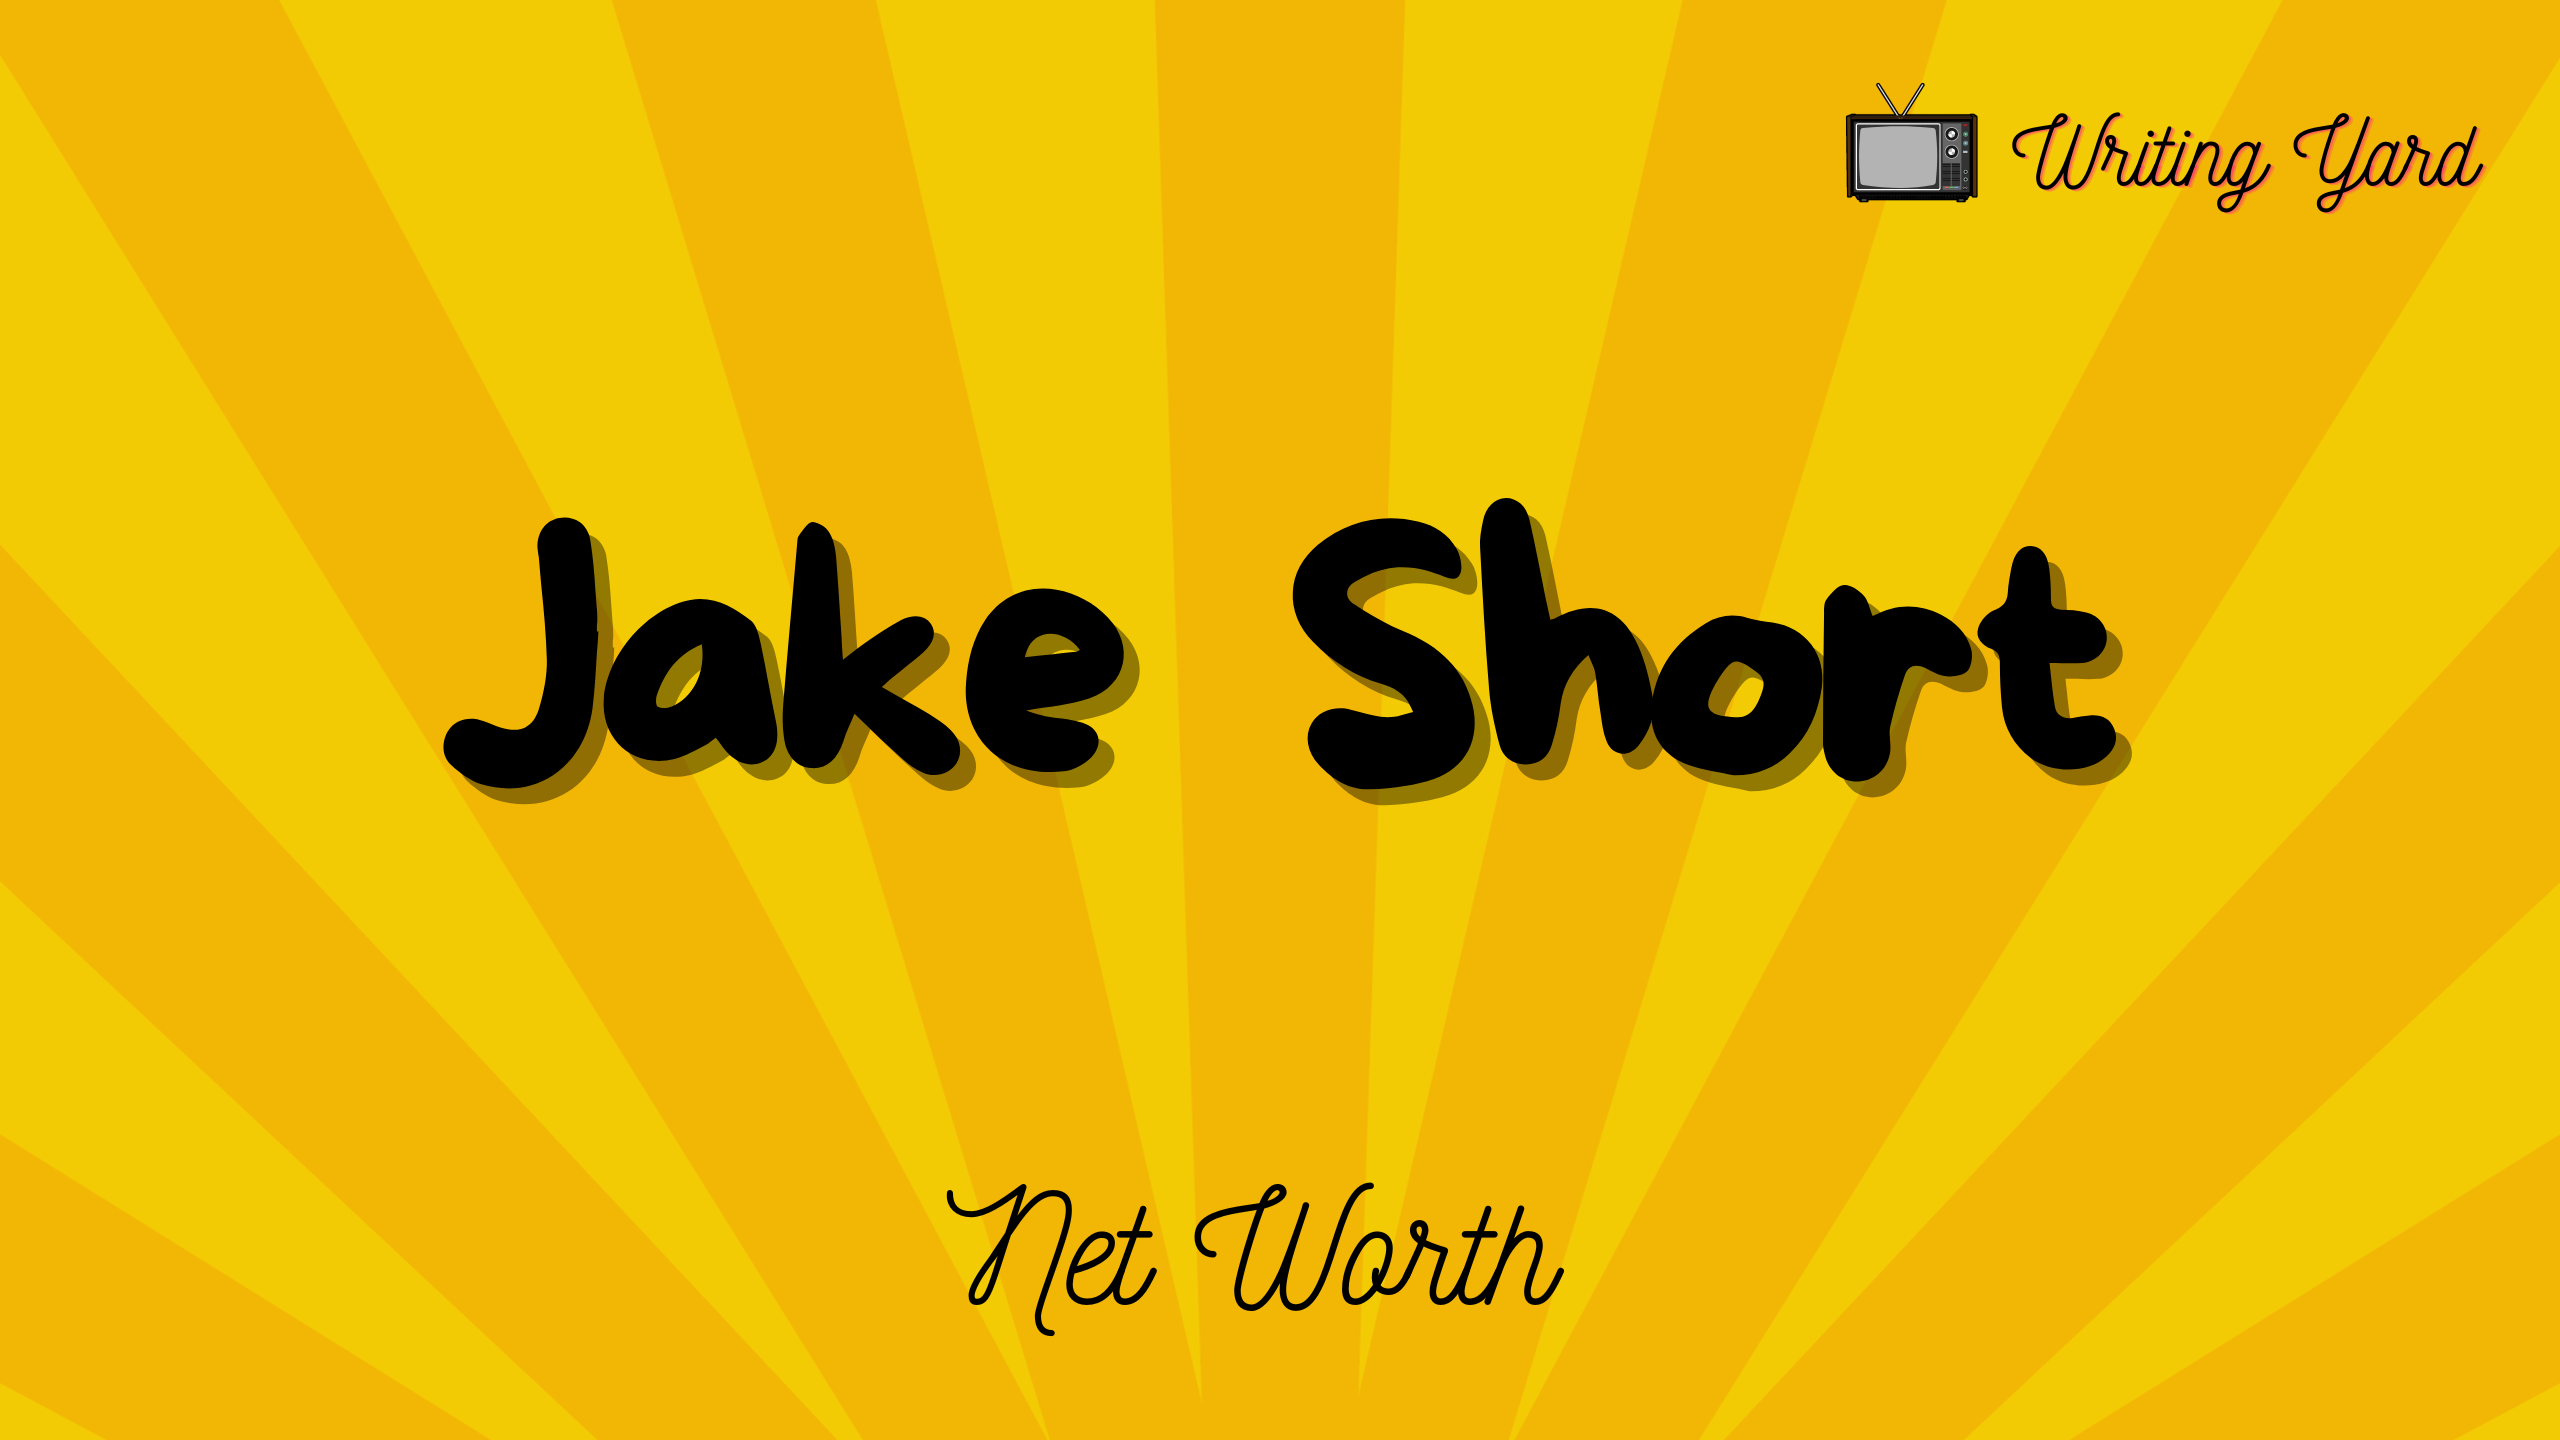 Jake Short net worth